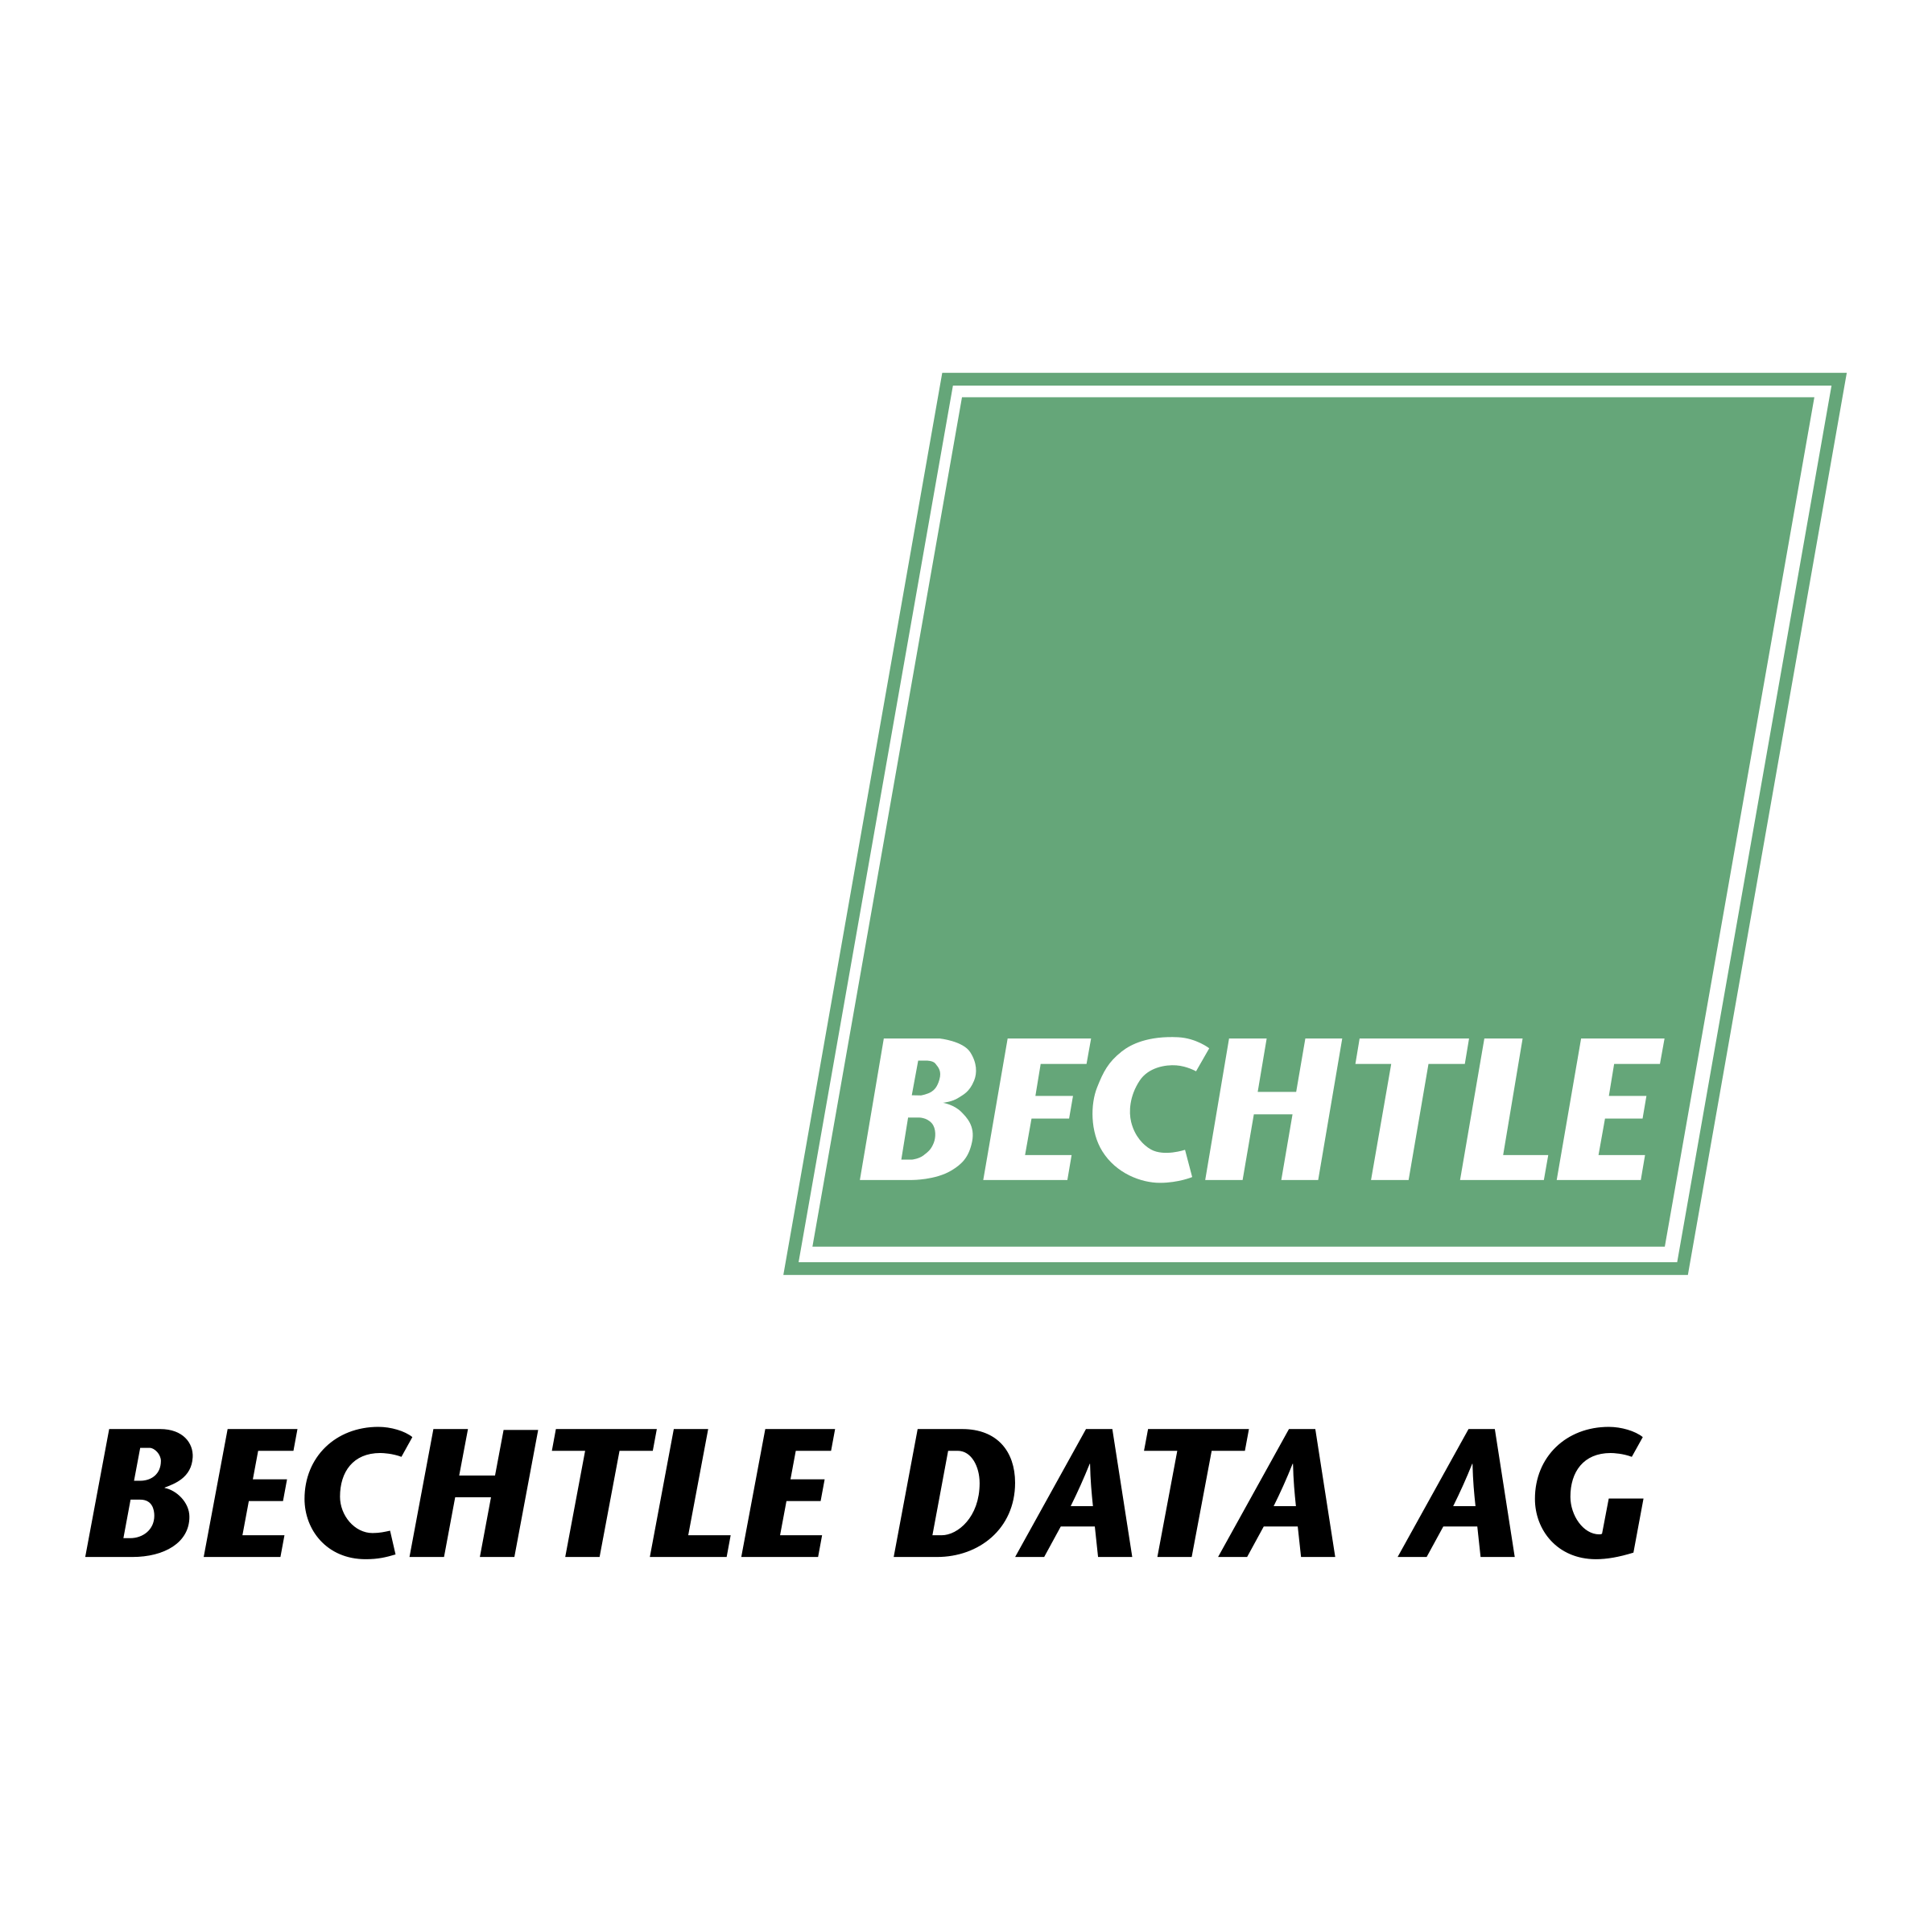 Bechtle Logo - Bechtle Data Logo PNG Transparent & SVG Vector - Freebie Supply